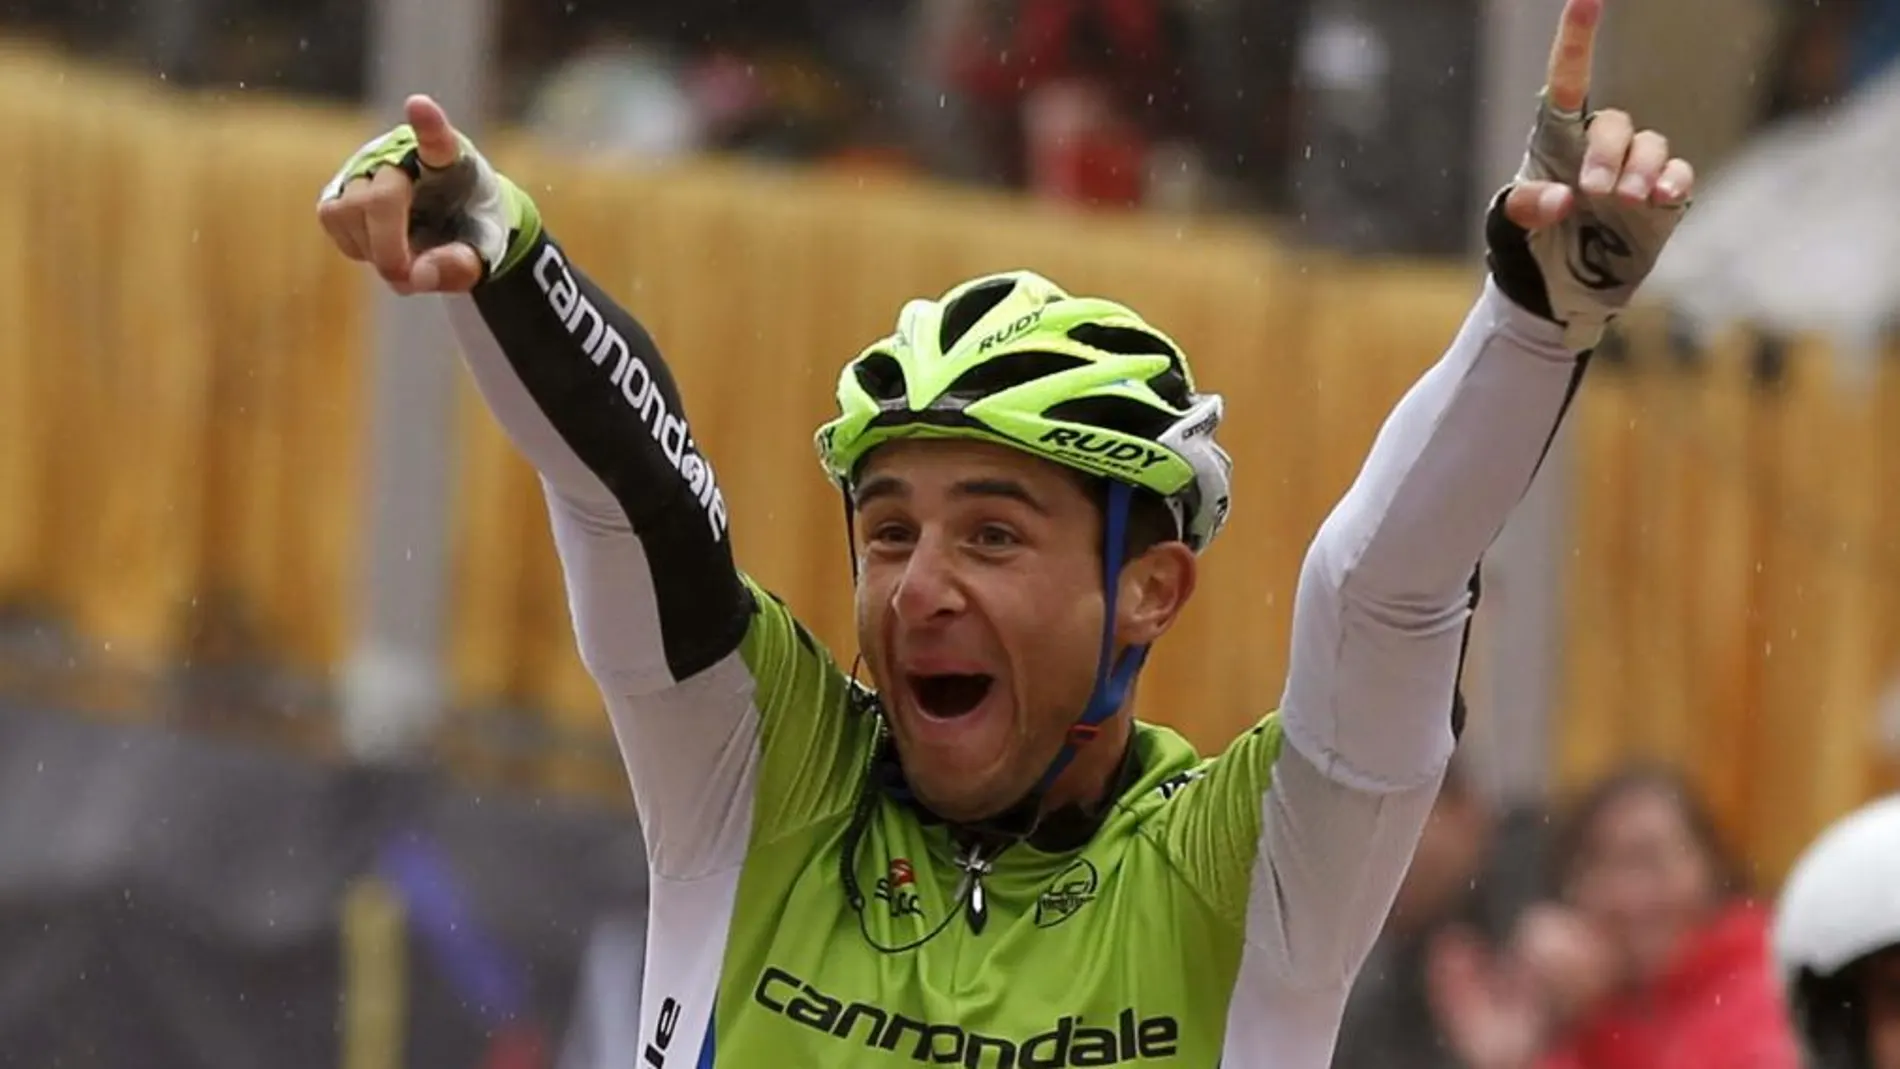 El ciclista italiano del equipo Cannondale, Daniele Ratto, se proclama vencedor de la décimo cuarta etapa de la Vuelta